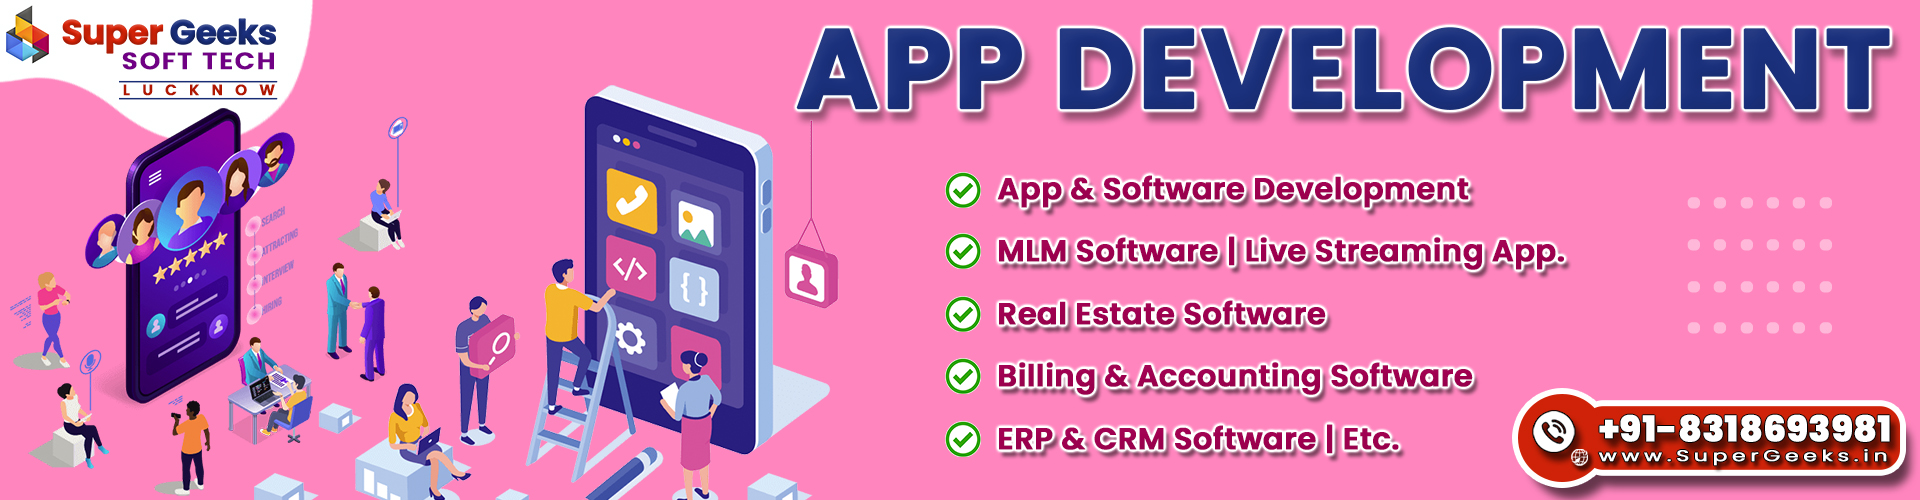 App Development Services in India